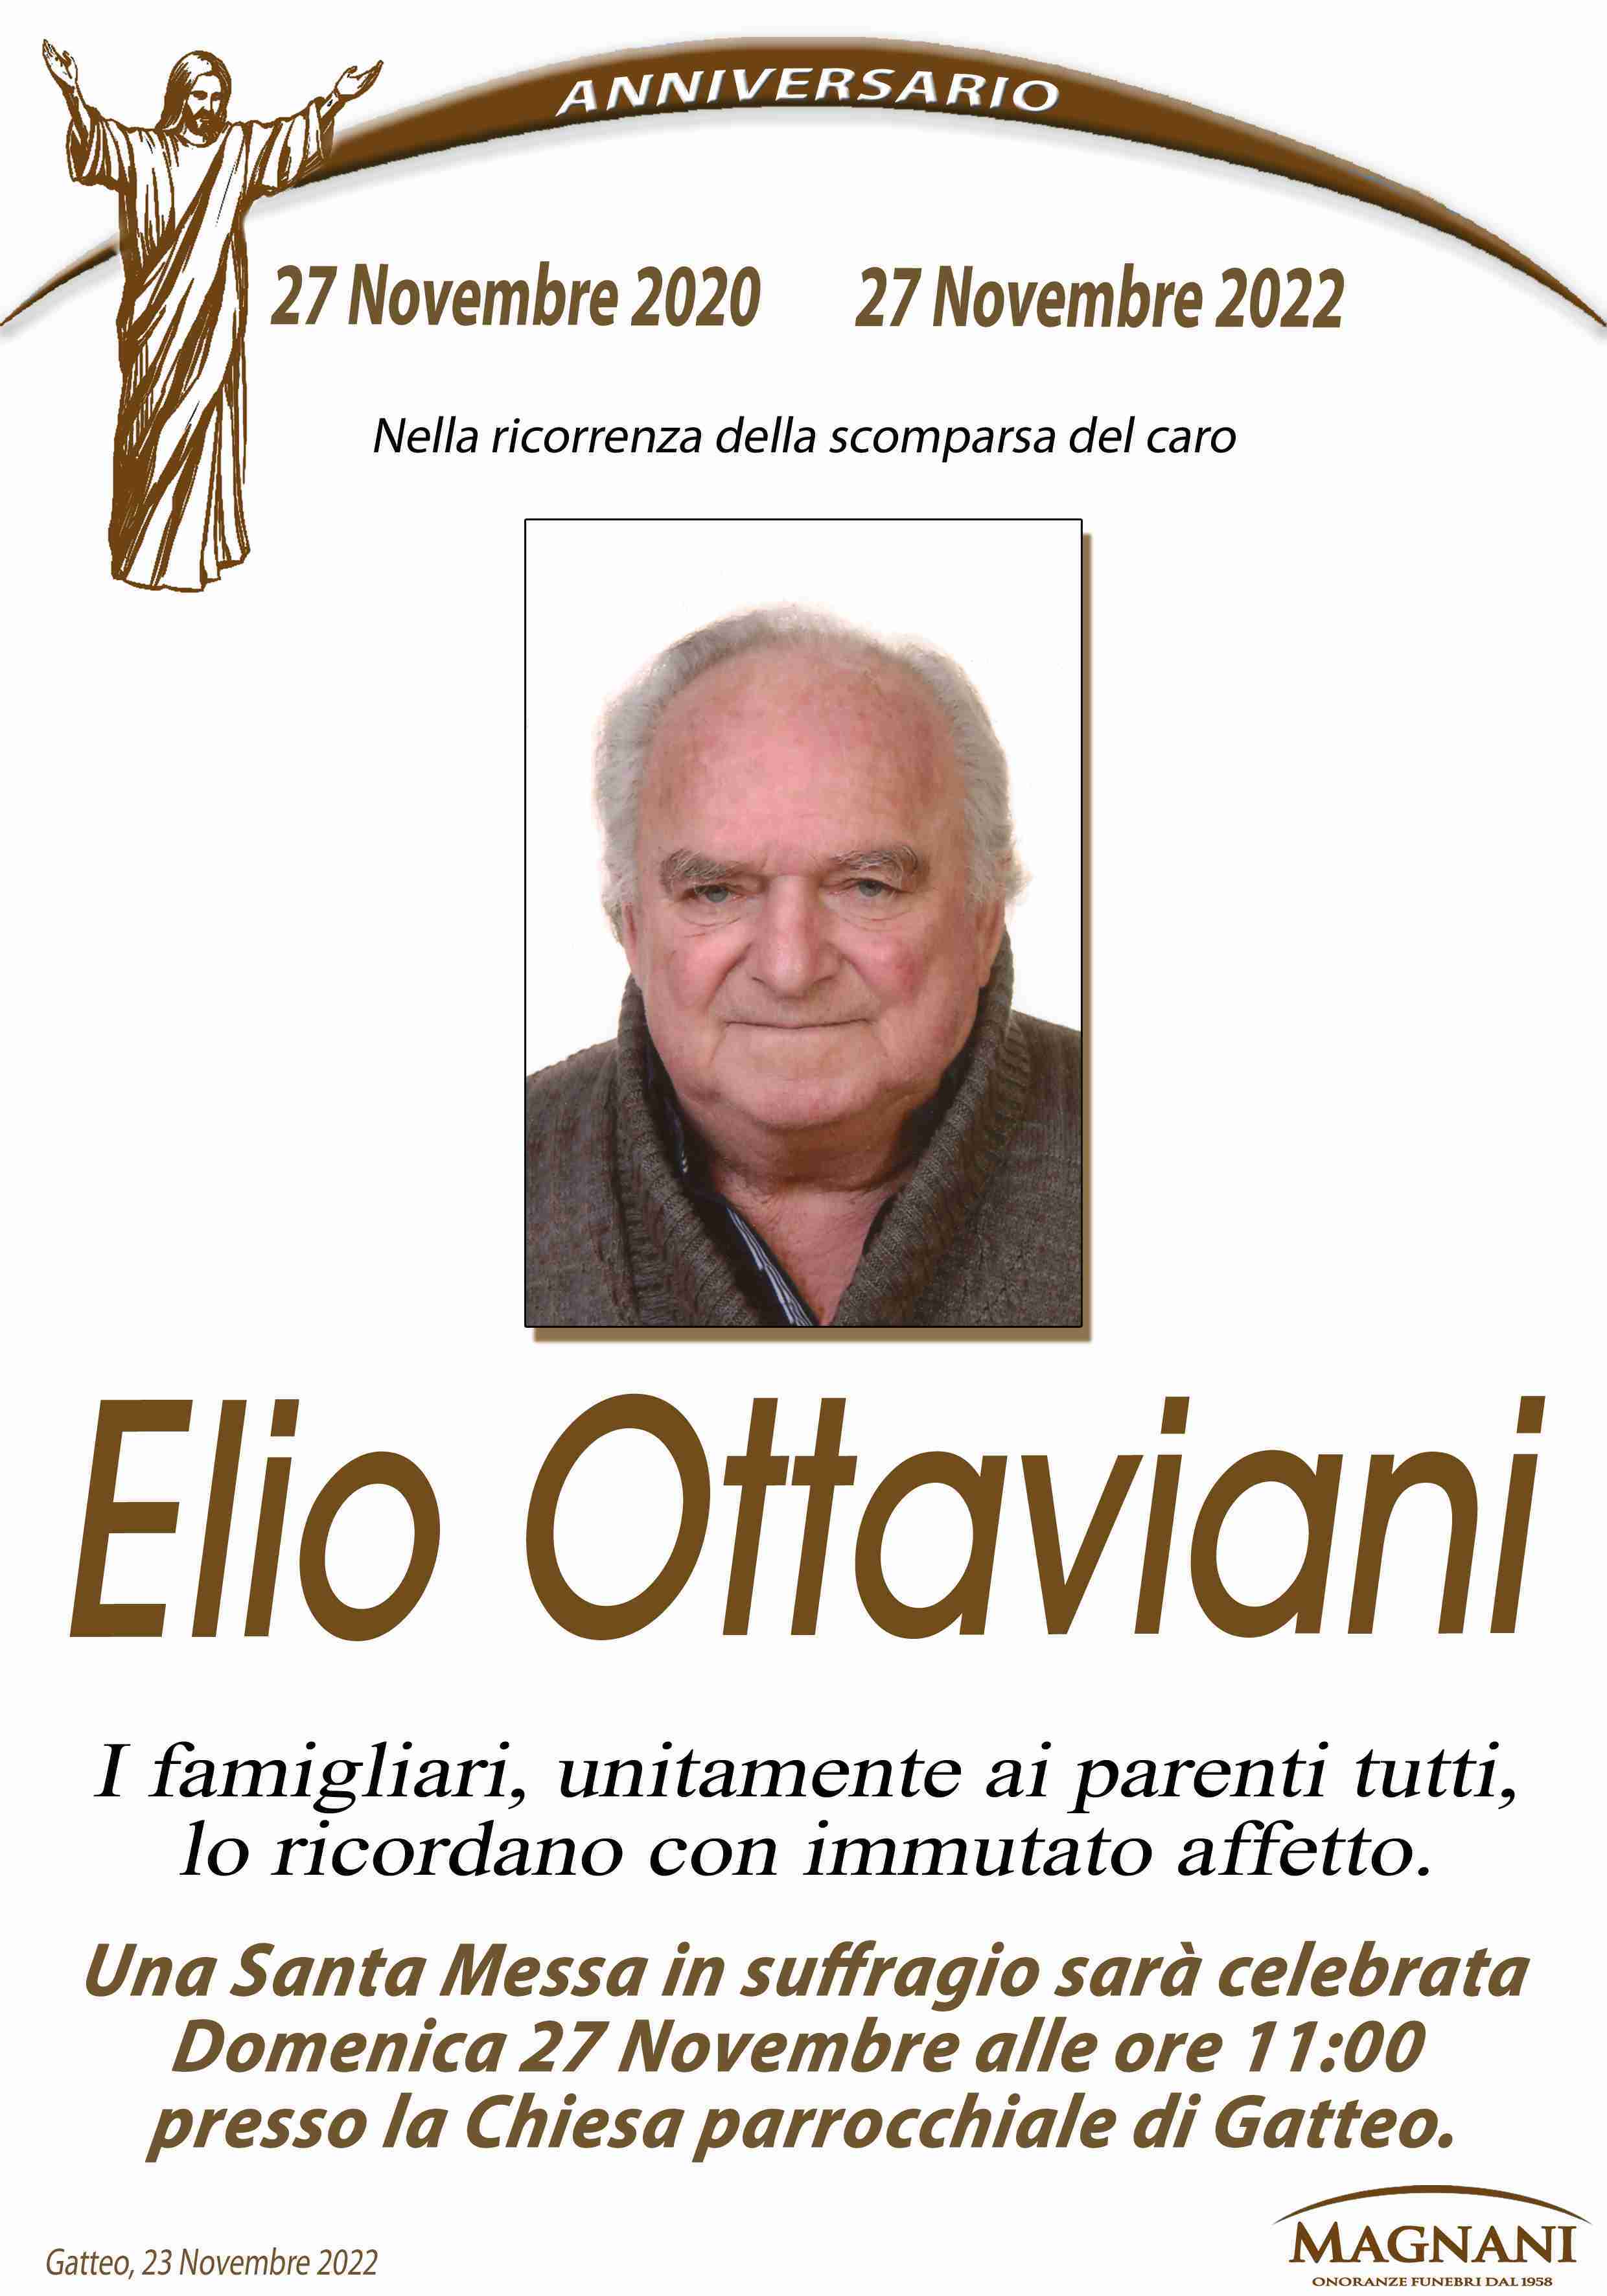 Elio Ottaviani